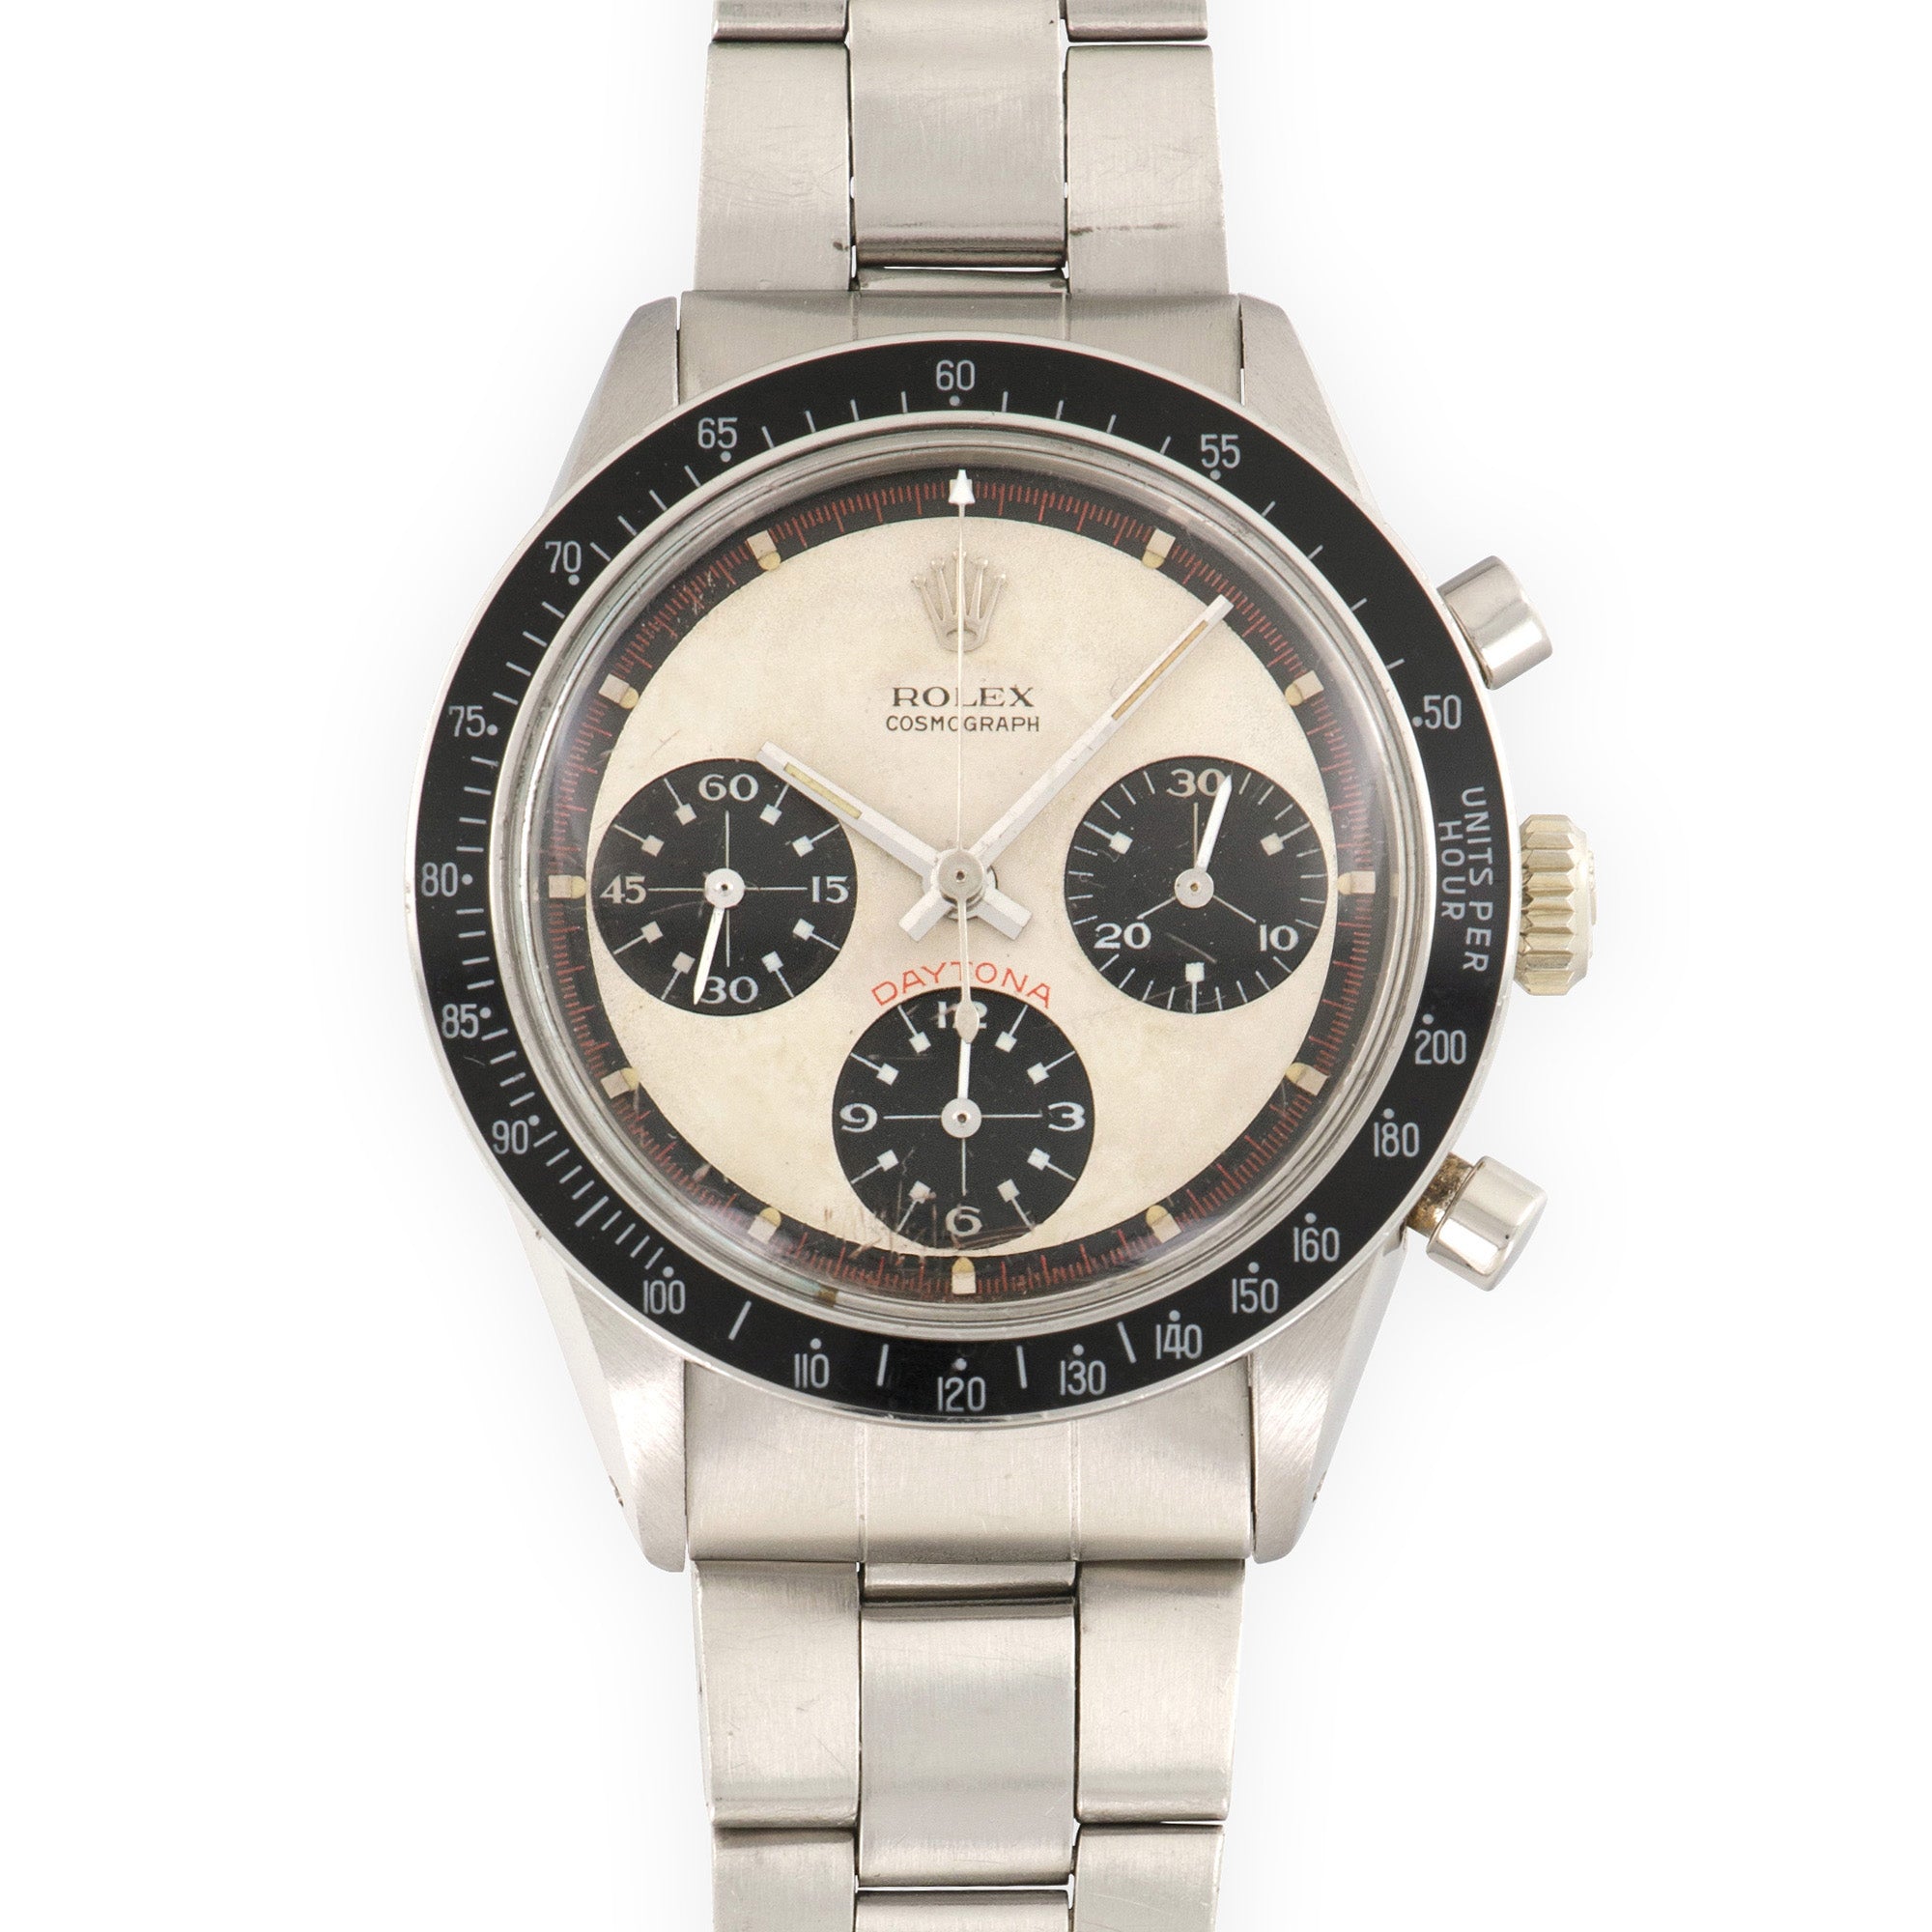 Rolex - Rolex Cosmograph Daytona Paul Newman Watch Ref. 6241 - The Keystone Watches